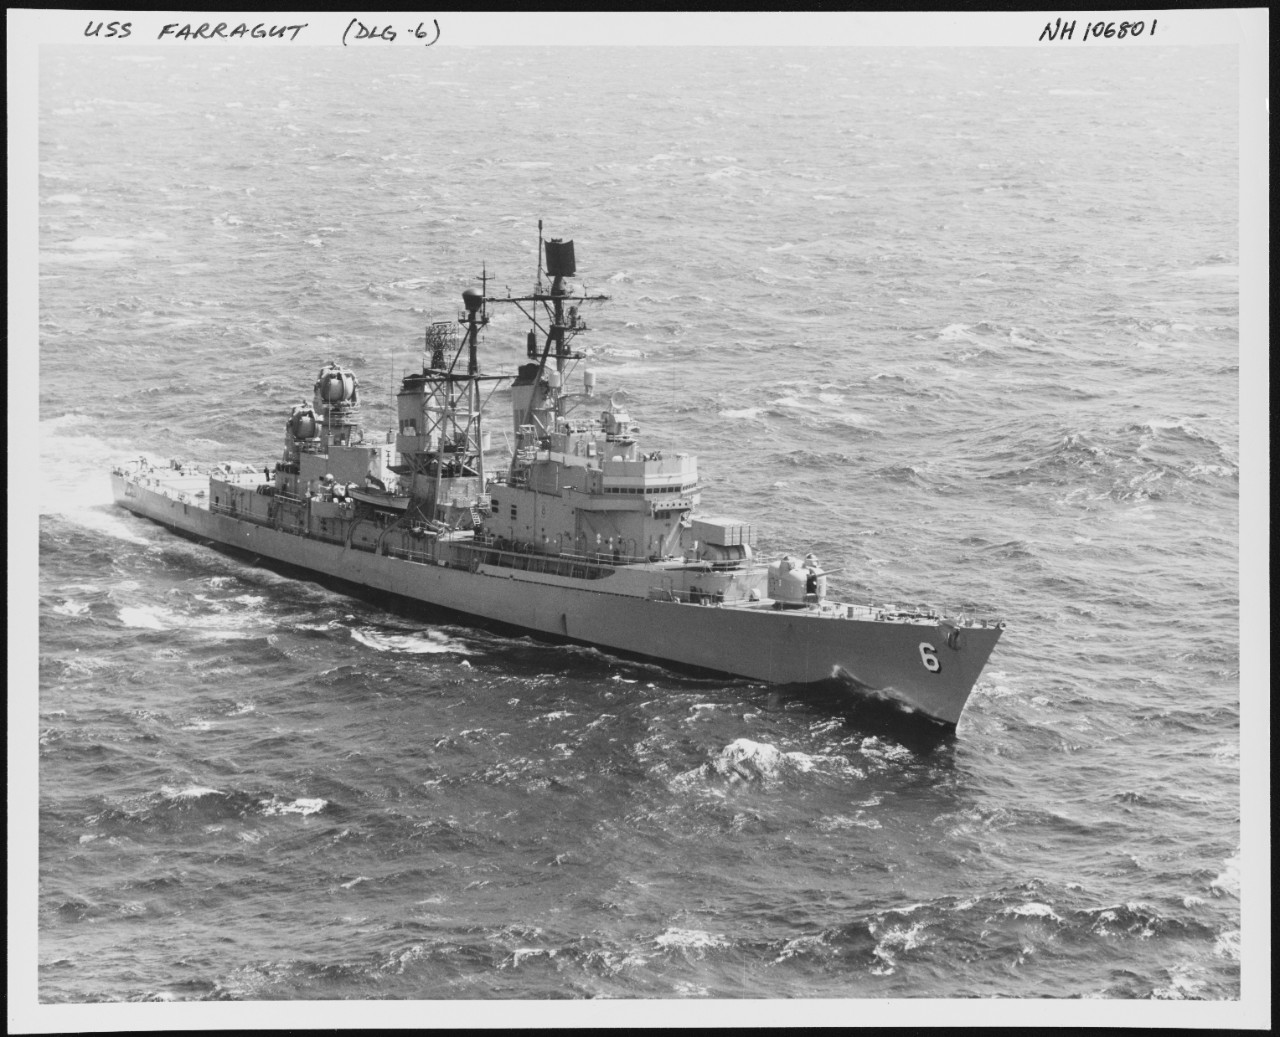 Photo # NH 106801  USS Farragut